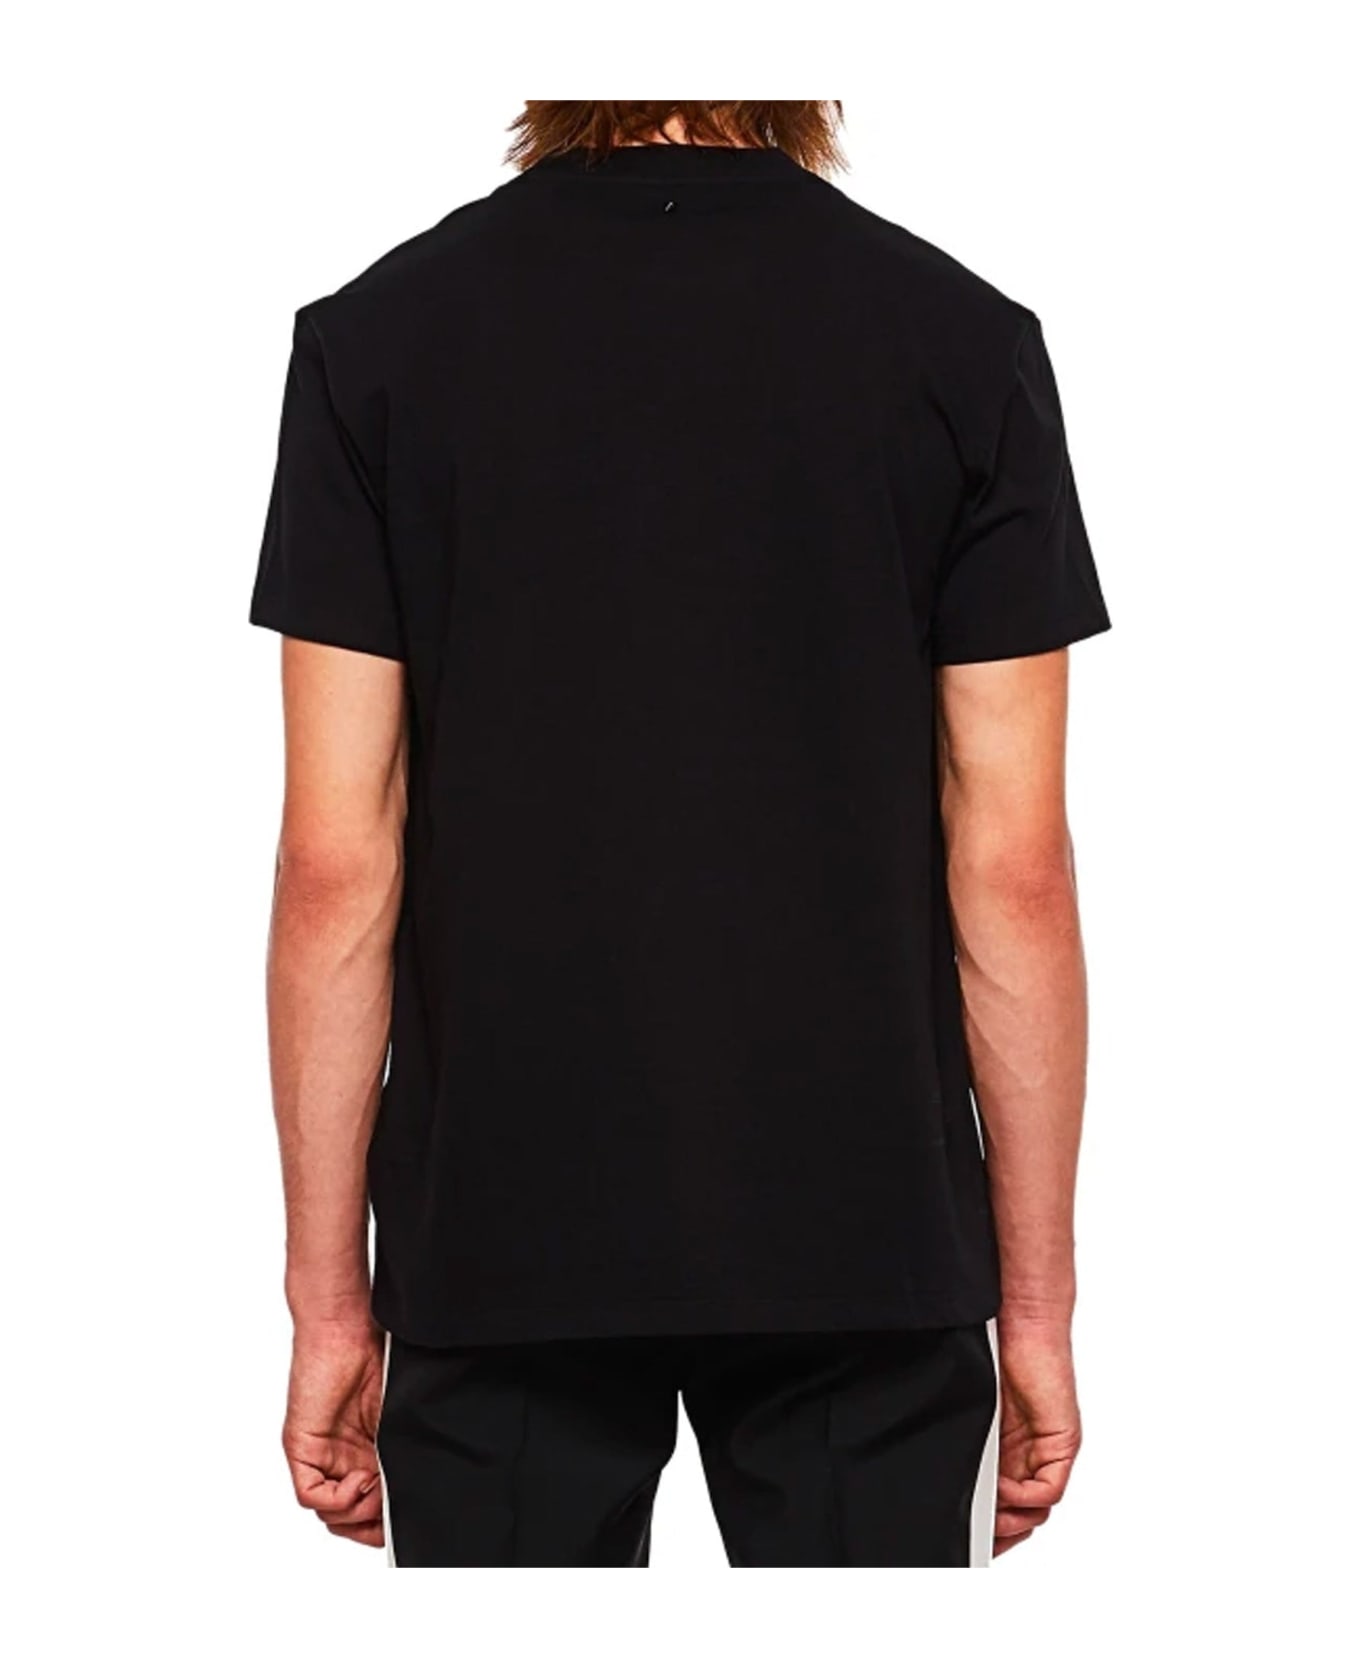 Valentino Good Lover T-shirt - Black